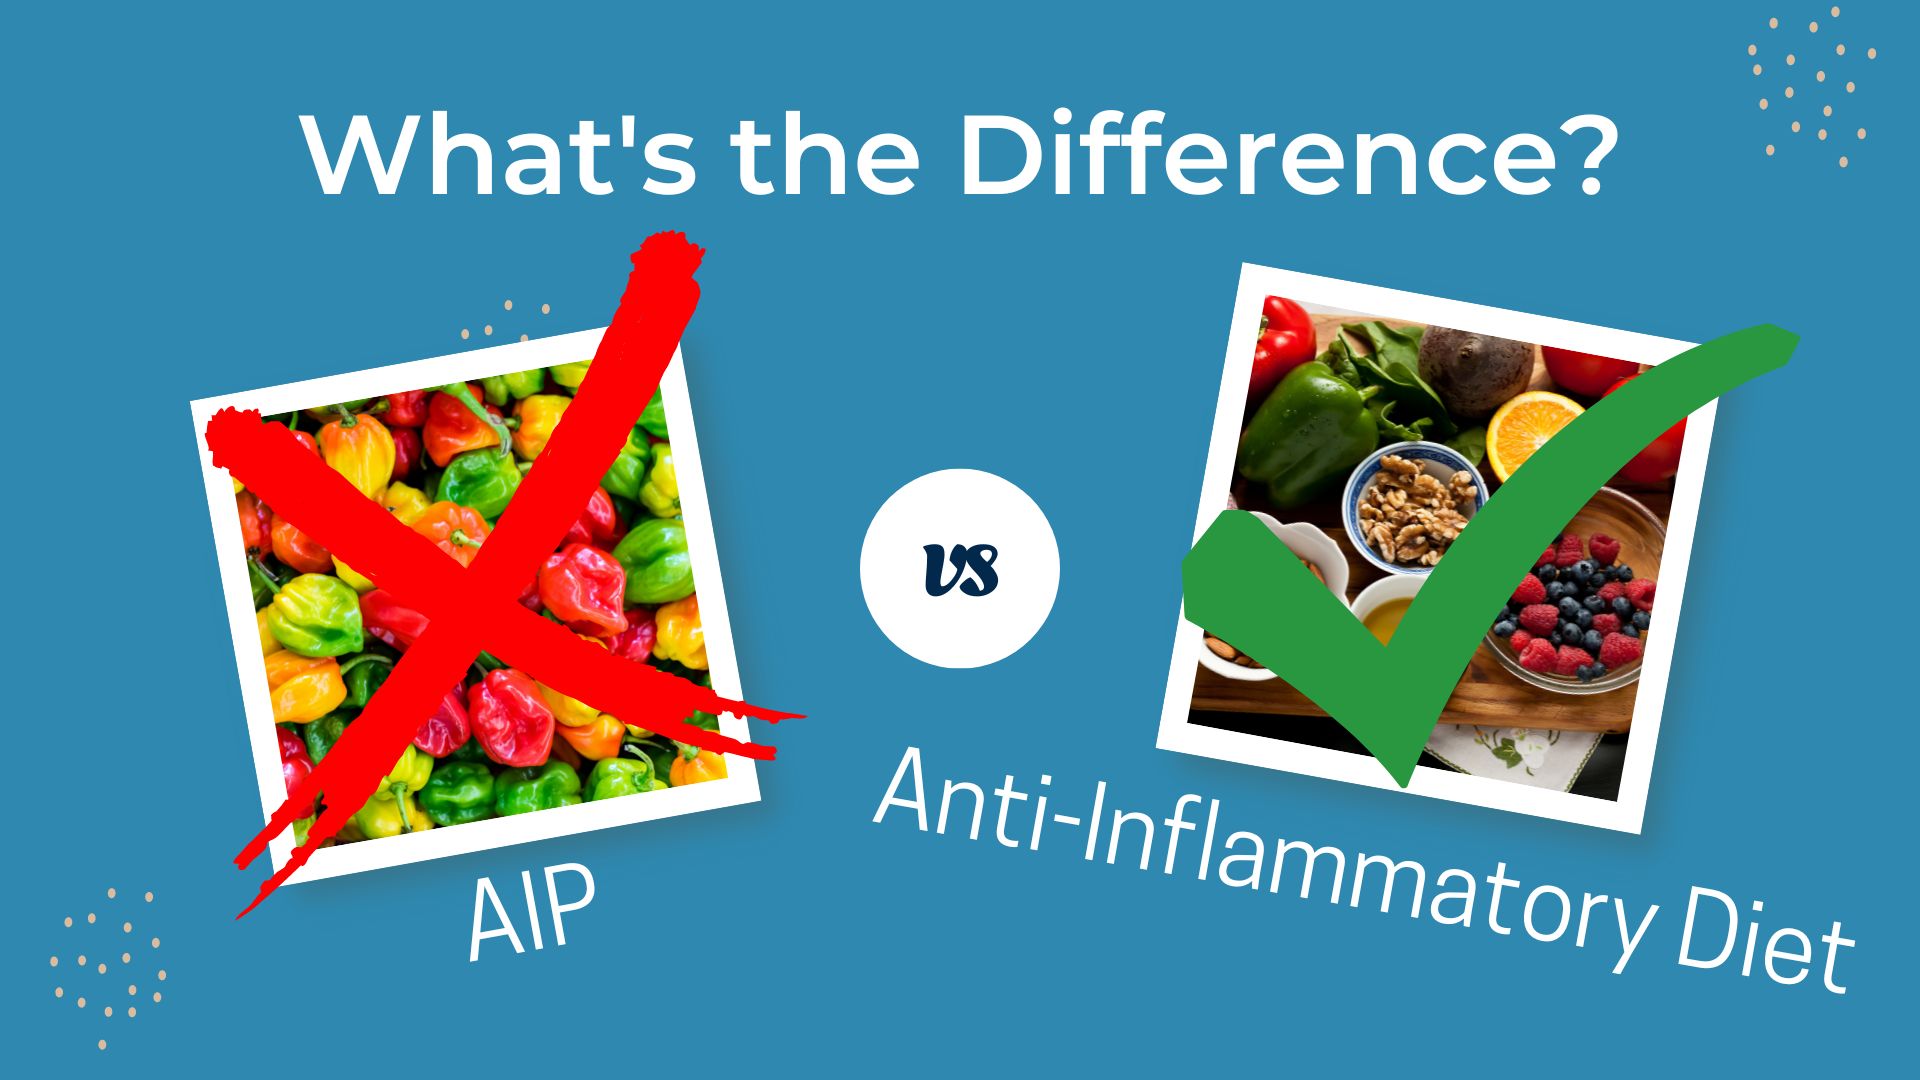 AIP vs. Anti-inflammatory Diet explained